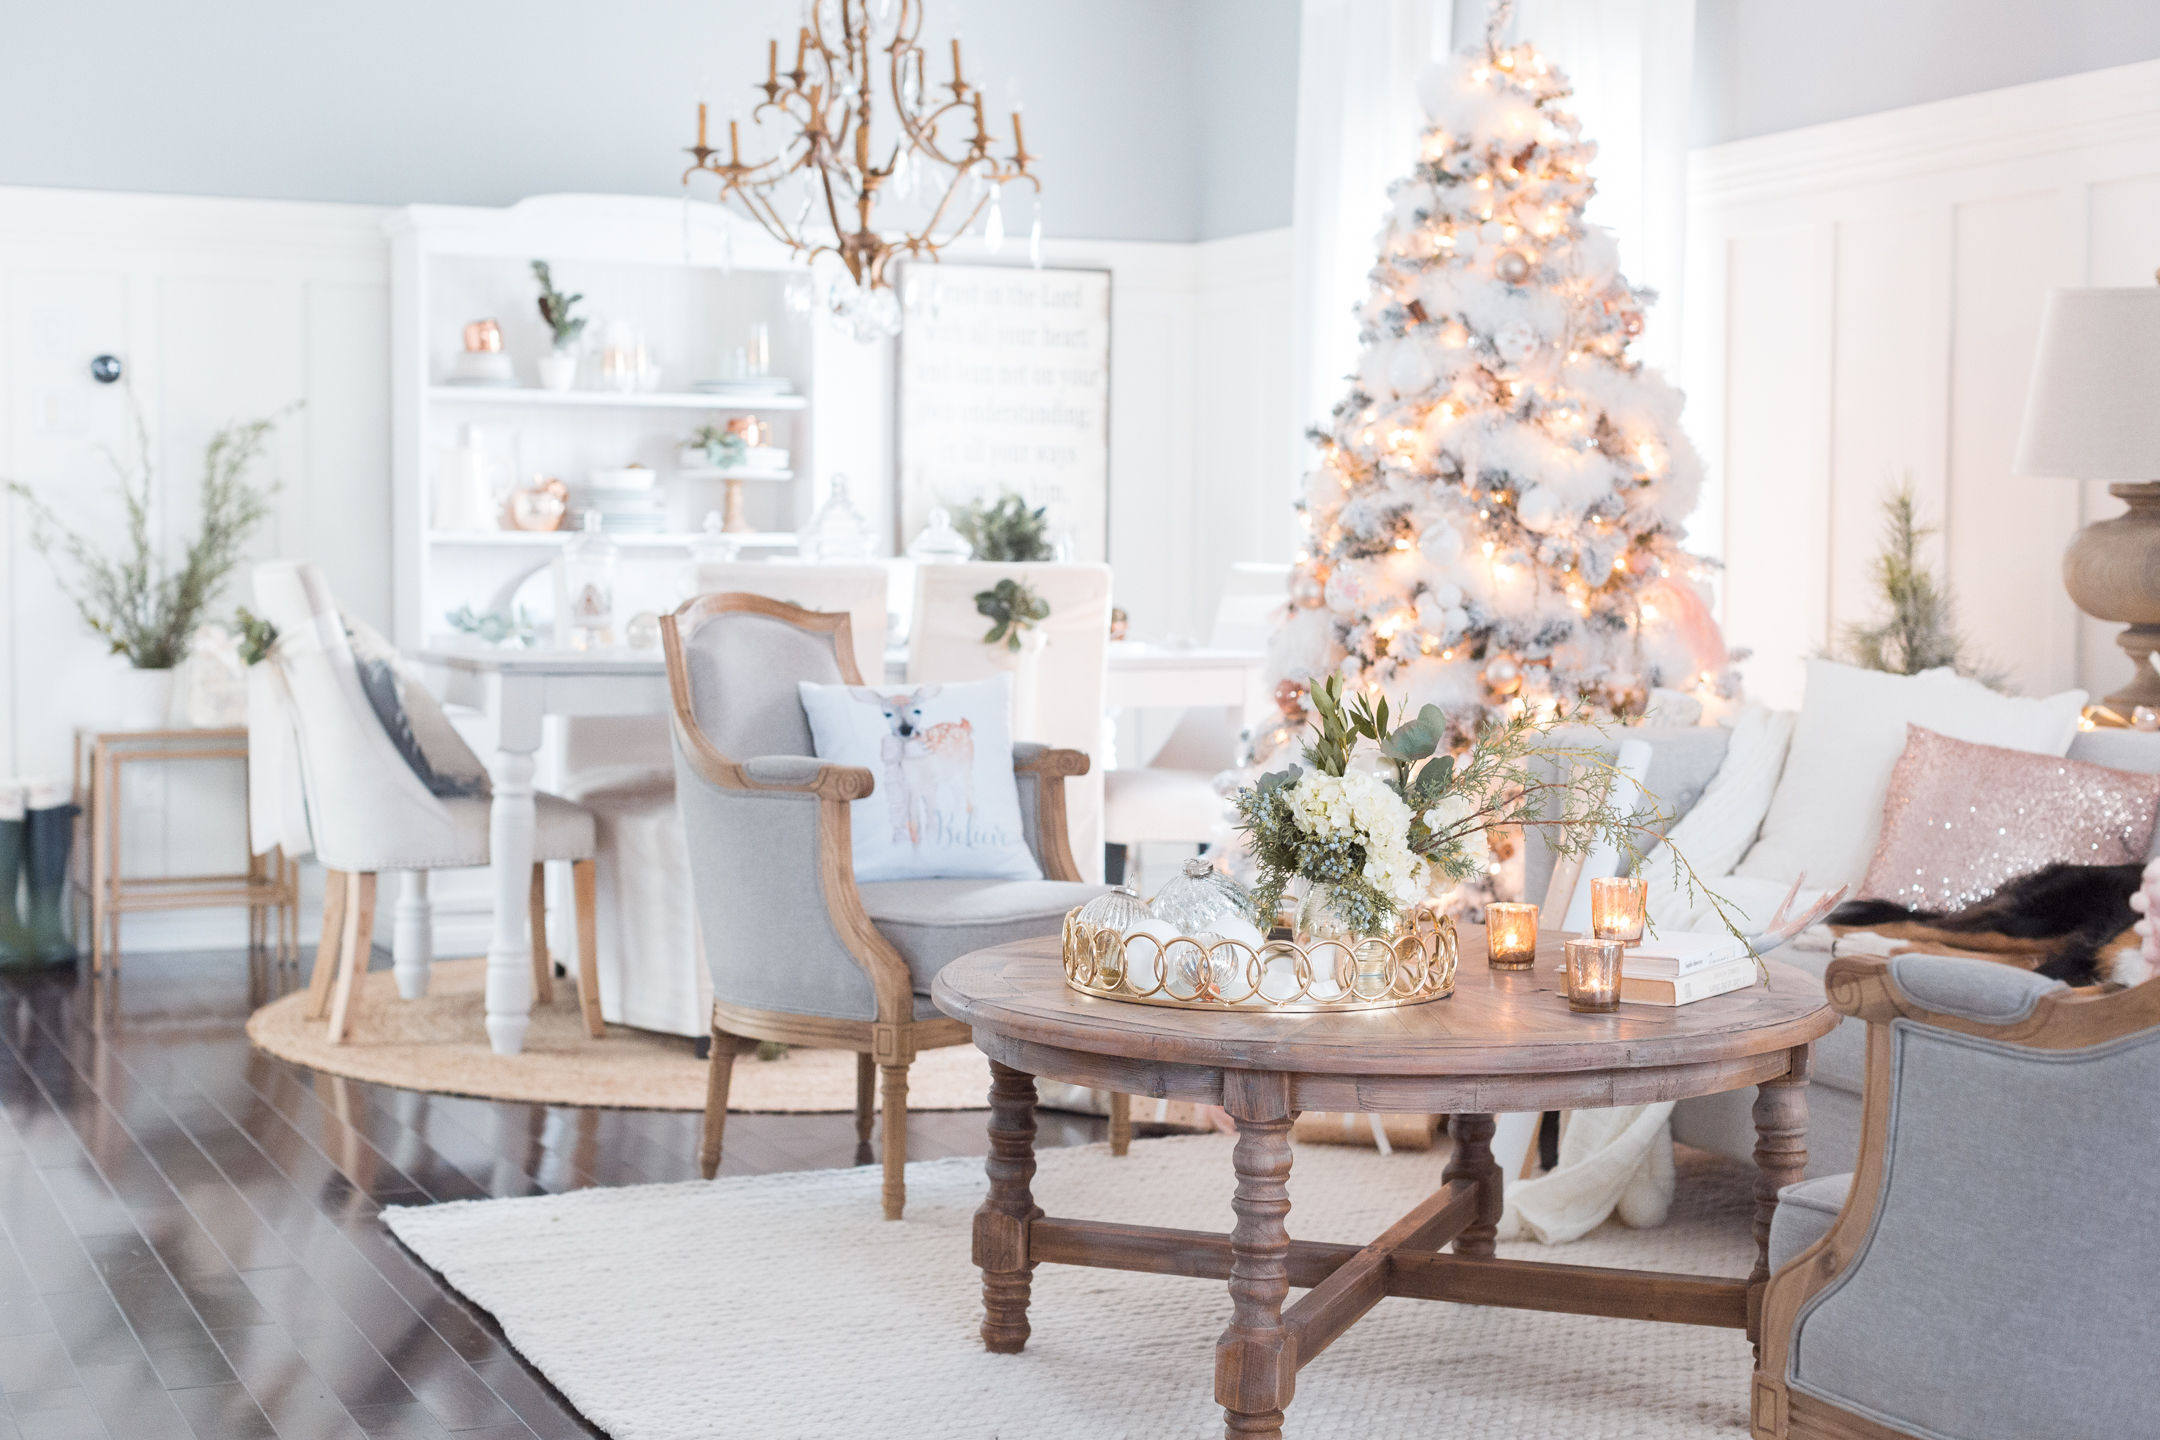 Luxury Christmas Tree Ornaments & Decorations